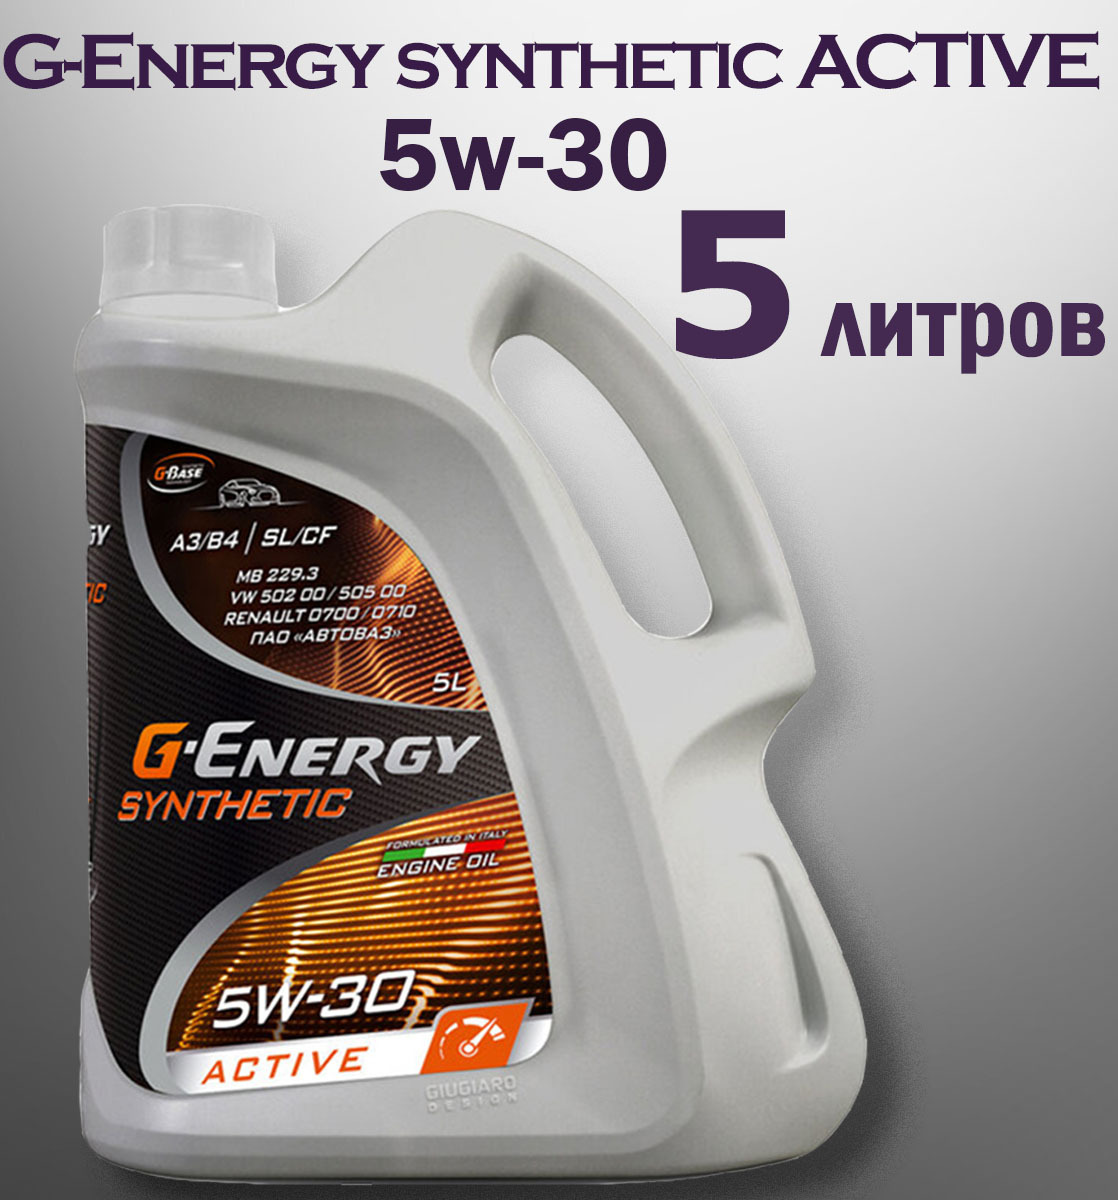 Актив 5 30. Масло g-Energy Syntetic Activ 5w30. G-Energy Synthetic Active 5w-30. G Energy 5w30 синтетика. Масло g Energy Synthetic Active 5w30.